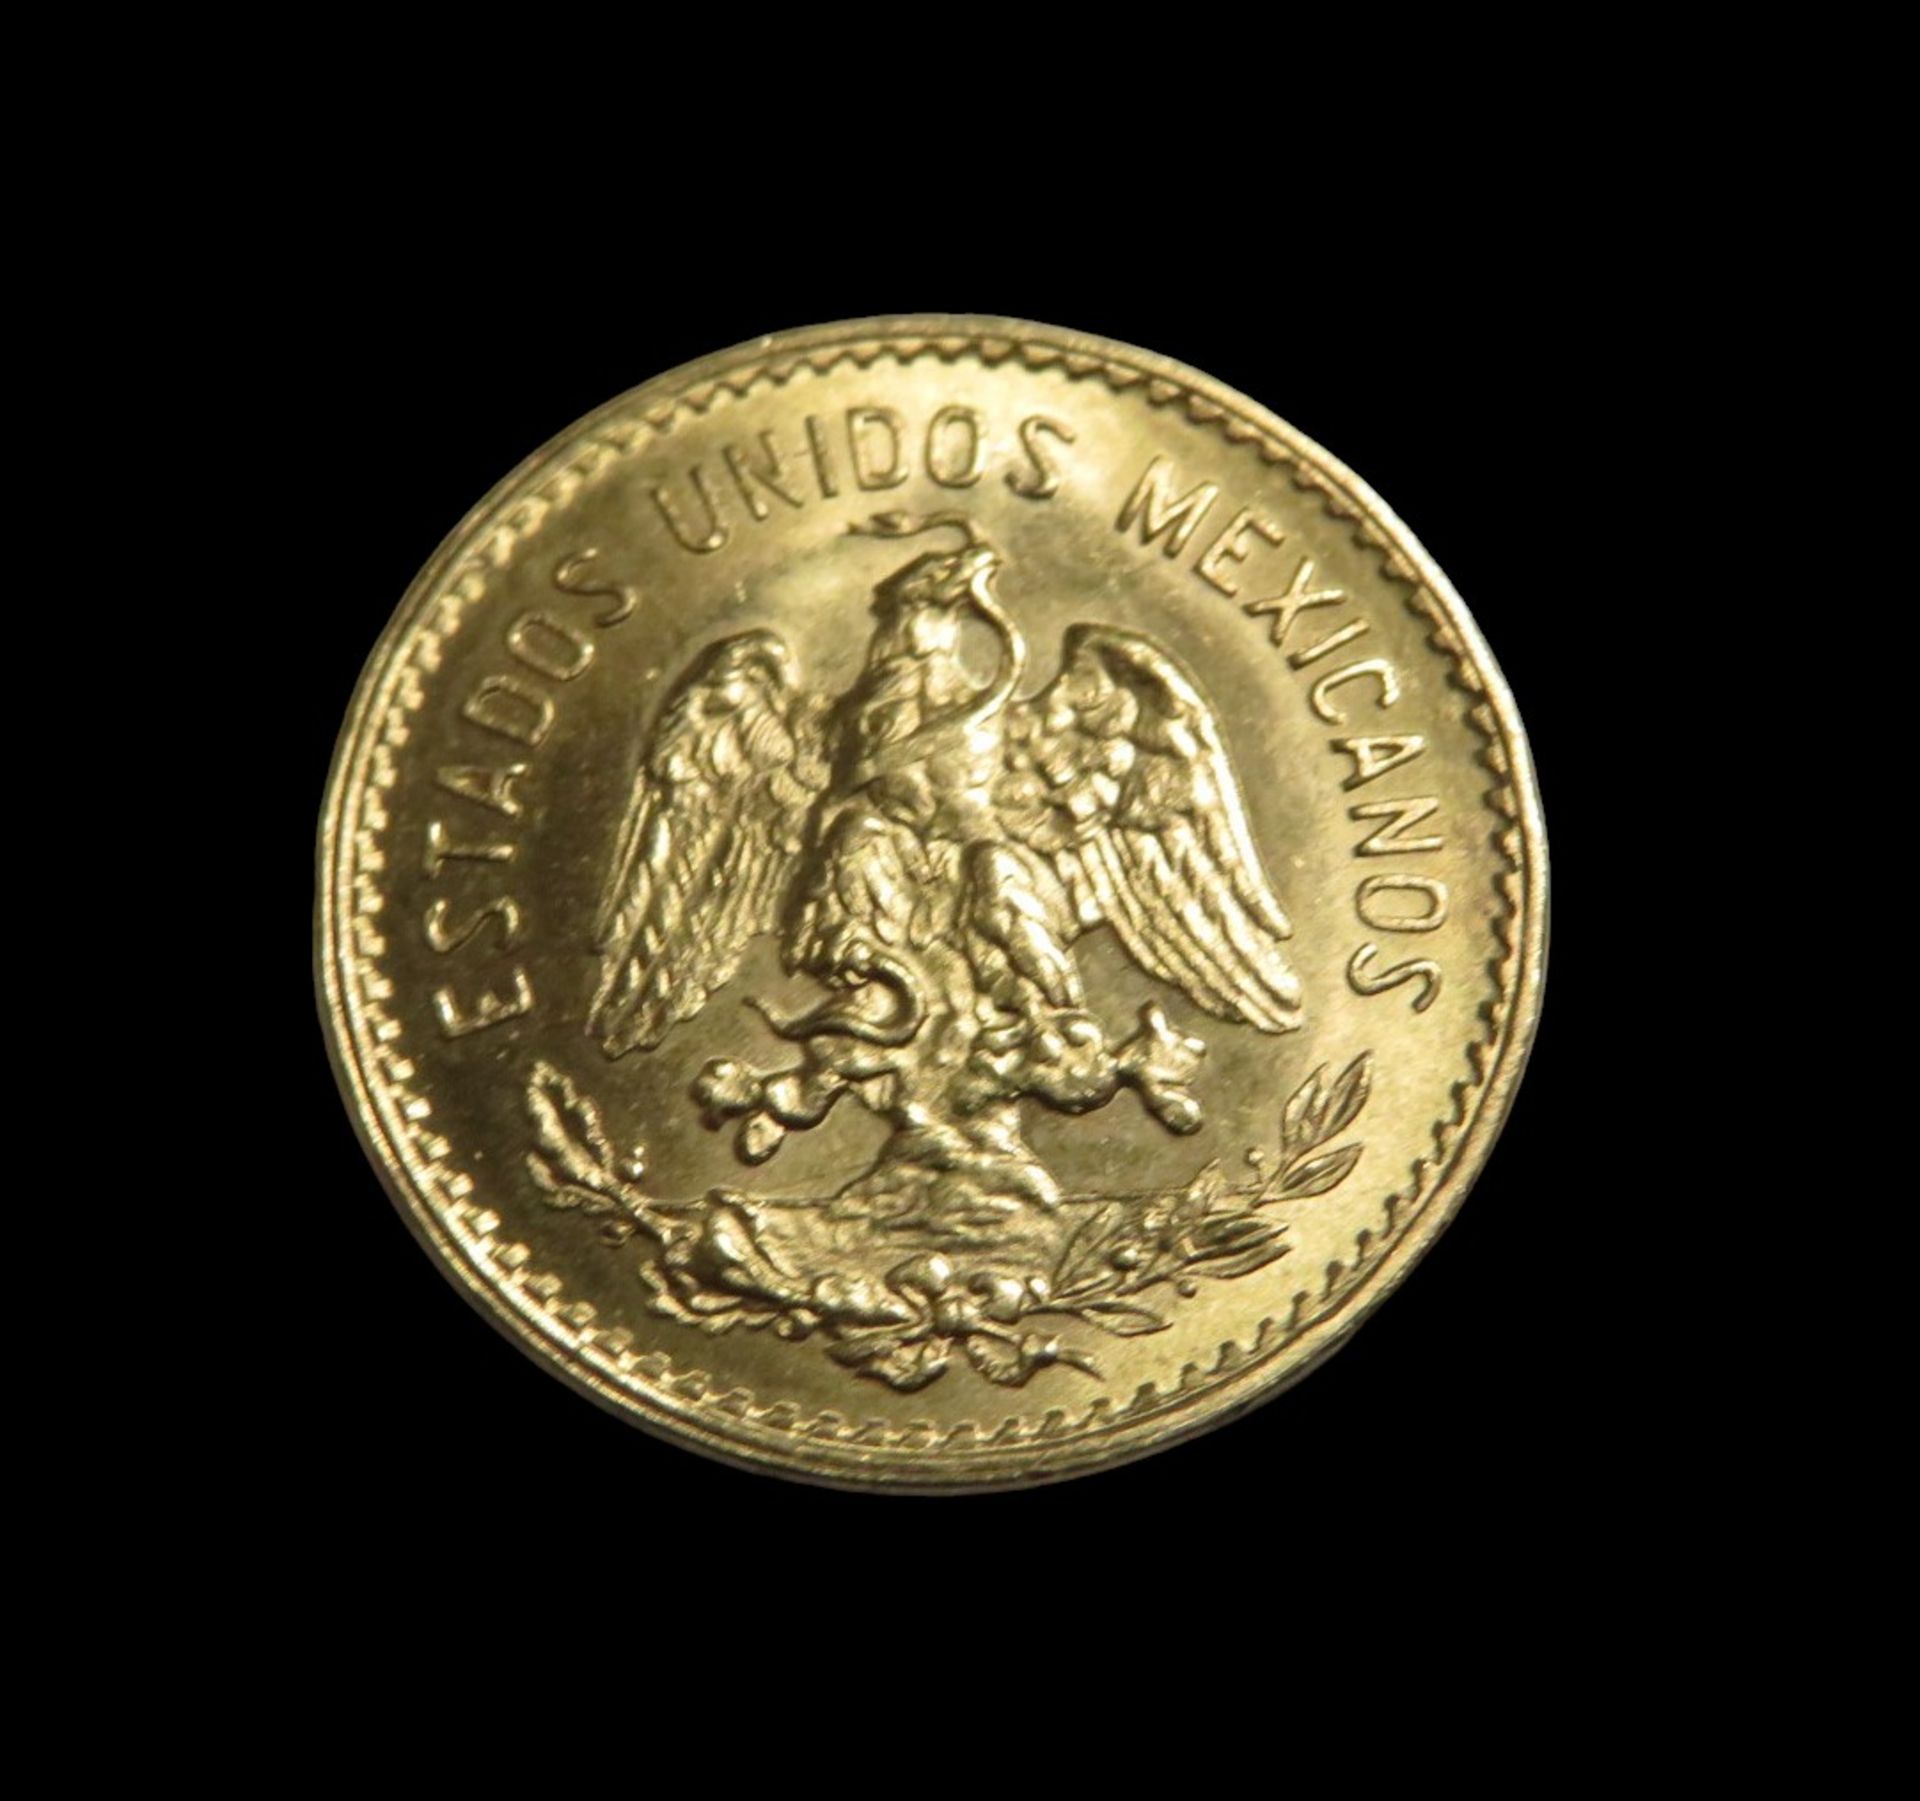 Goldmünze, Mexiko, 5 Pesos, 1955, Gold 900/000, 4,17 g, d 1,9 cm. - Image 2 of 2